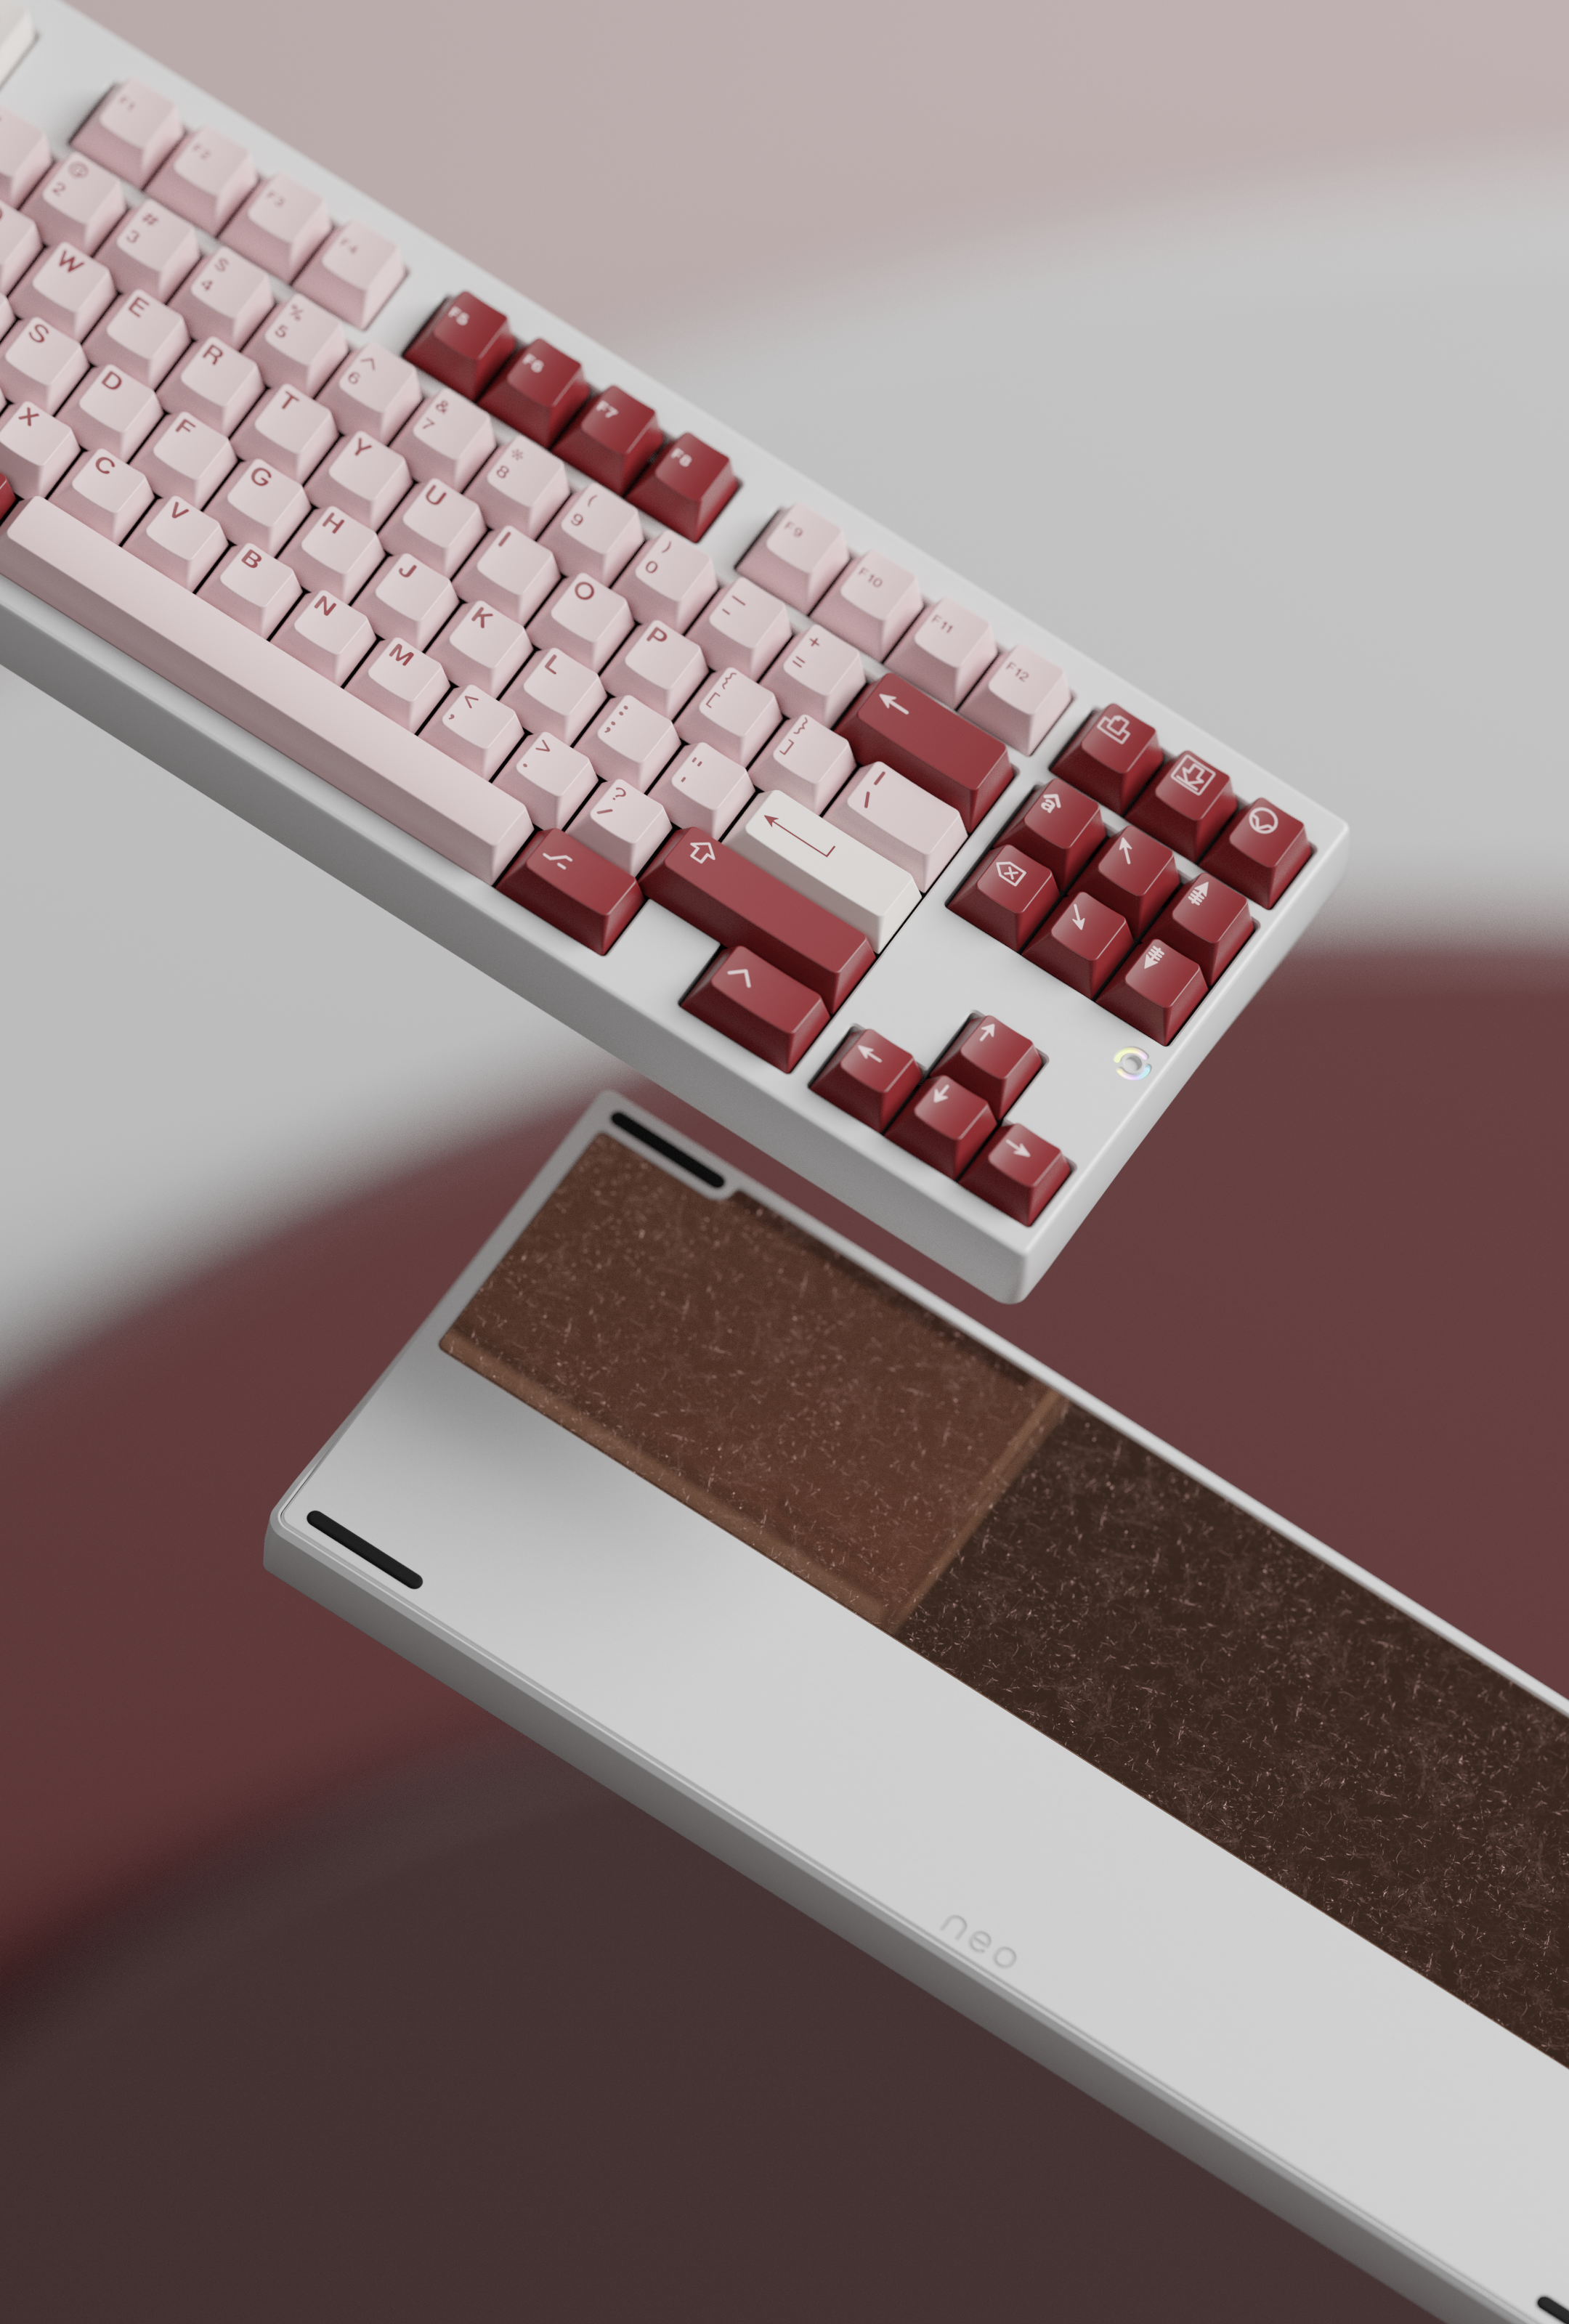 Neo80 - Keyboard Kit (Pre-Order)